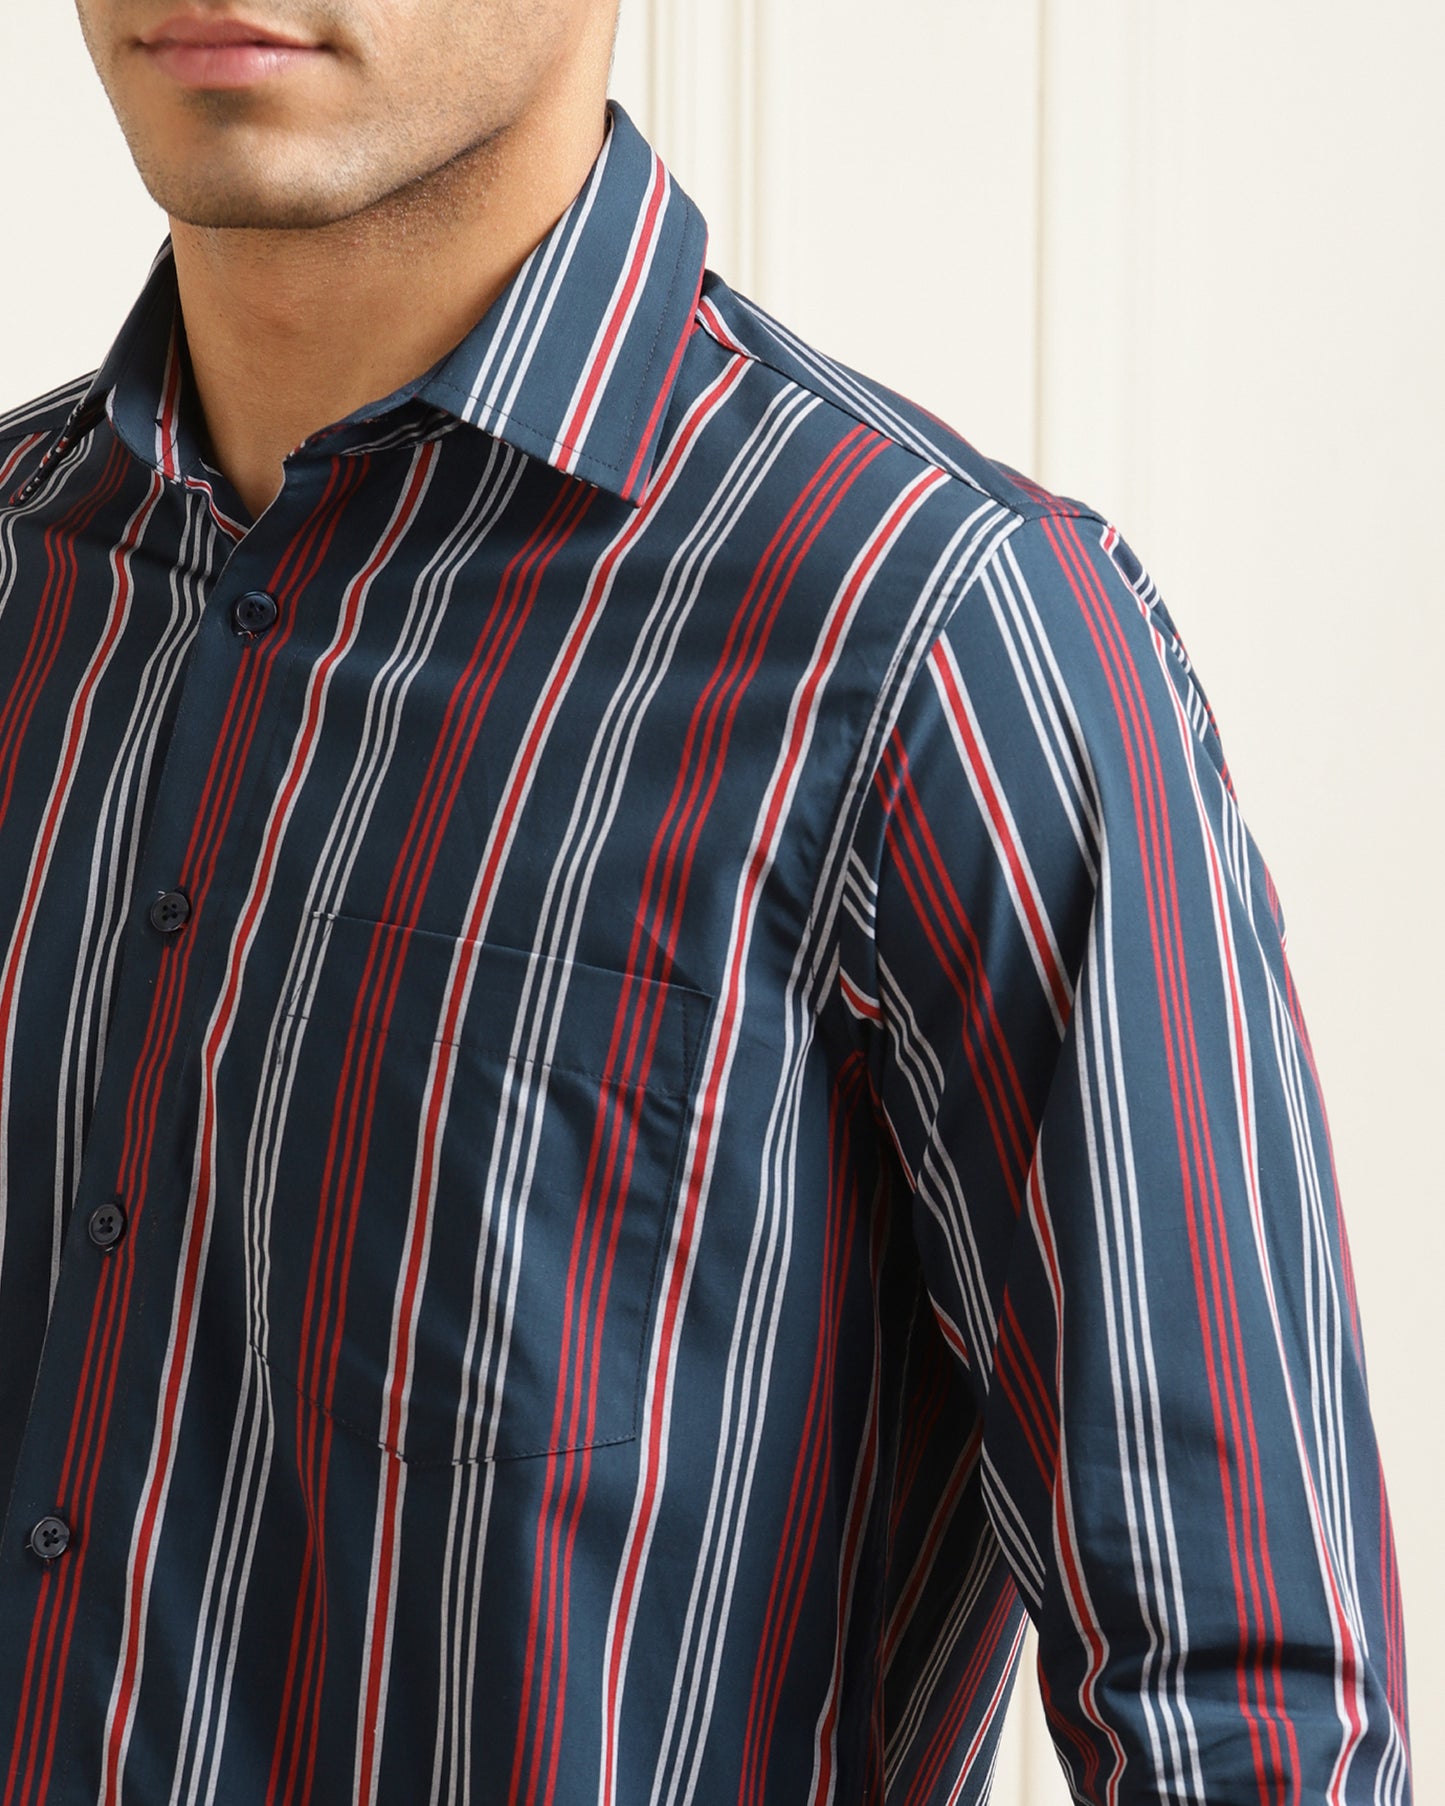 Quorum Stripes Shirt